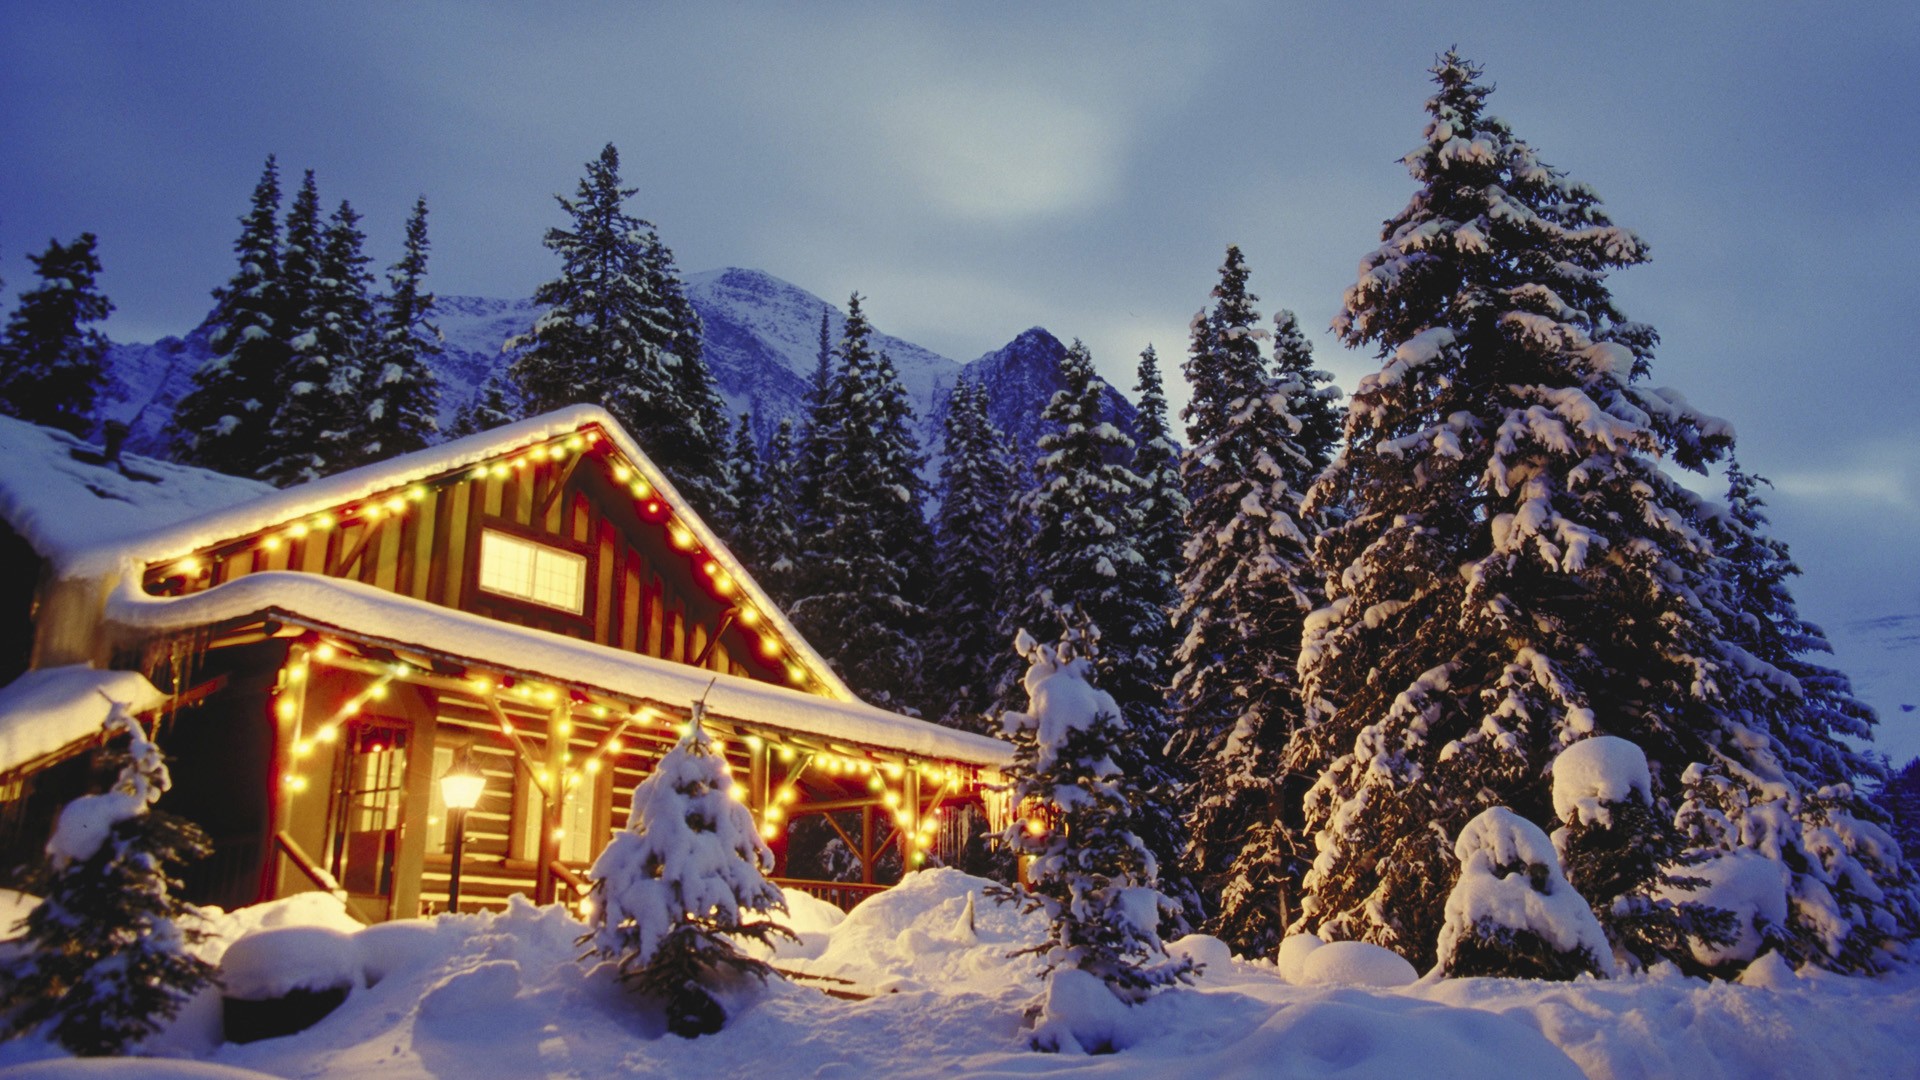 Uploads Christmas Scene In Snowy Mountains Wallpaper Jpg